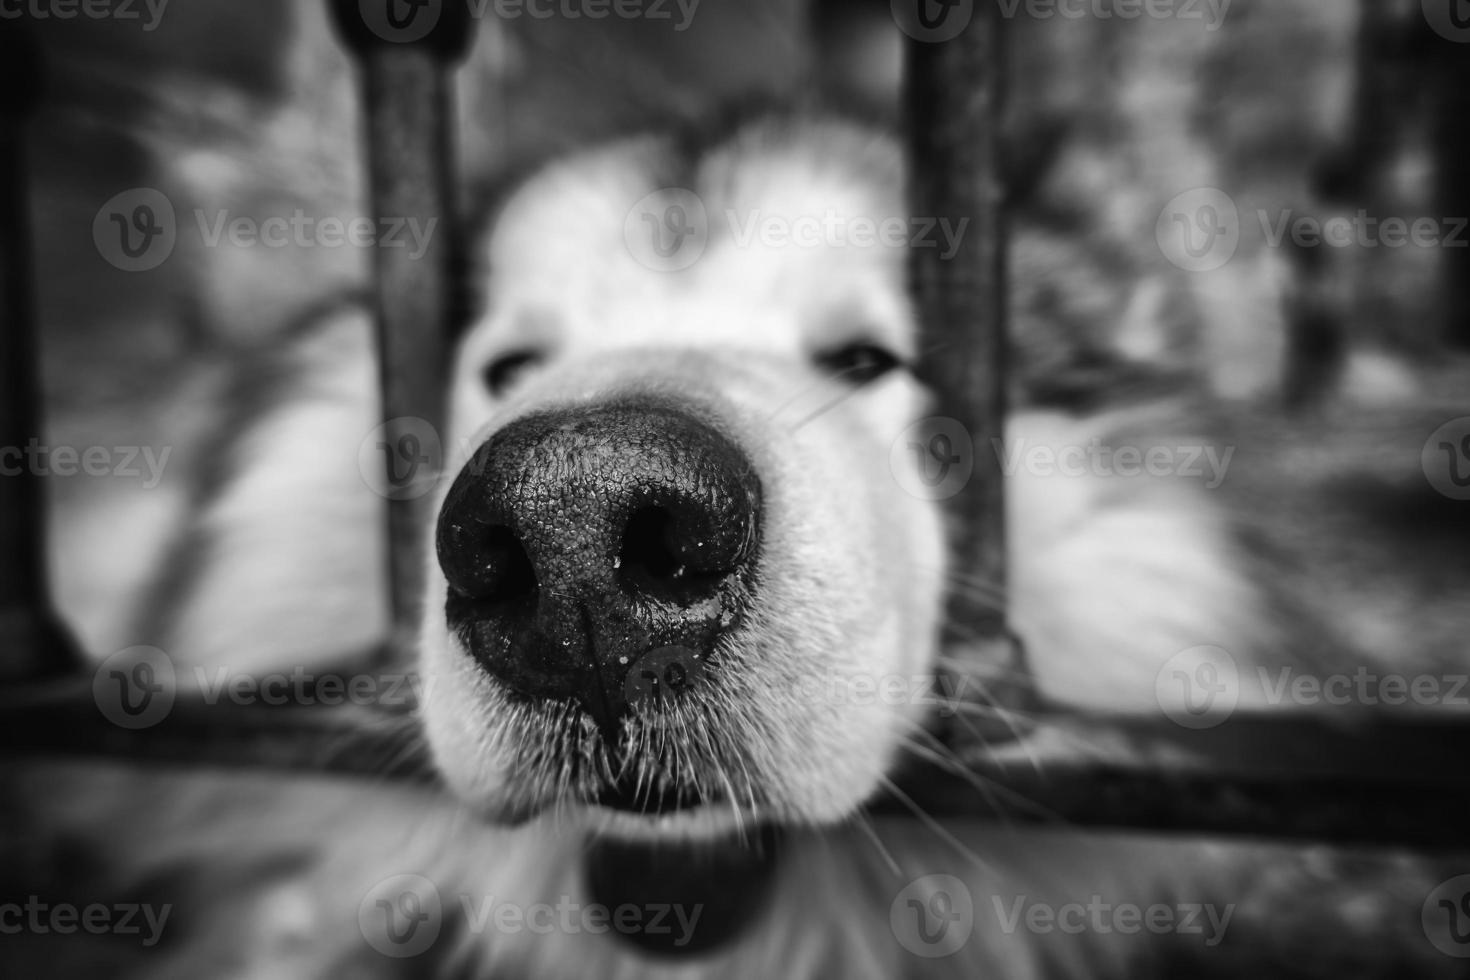 husky su una recinzione foto